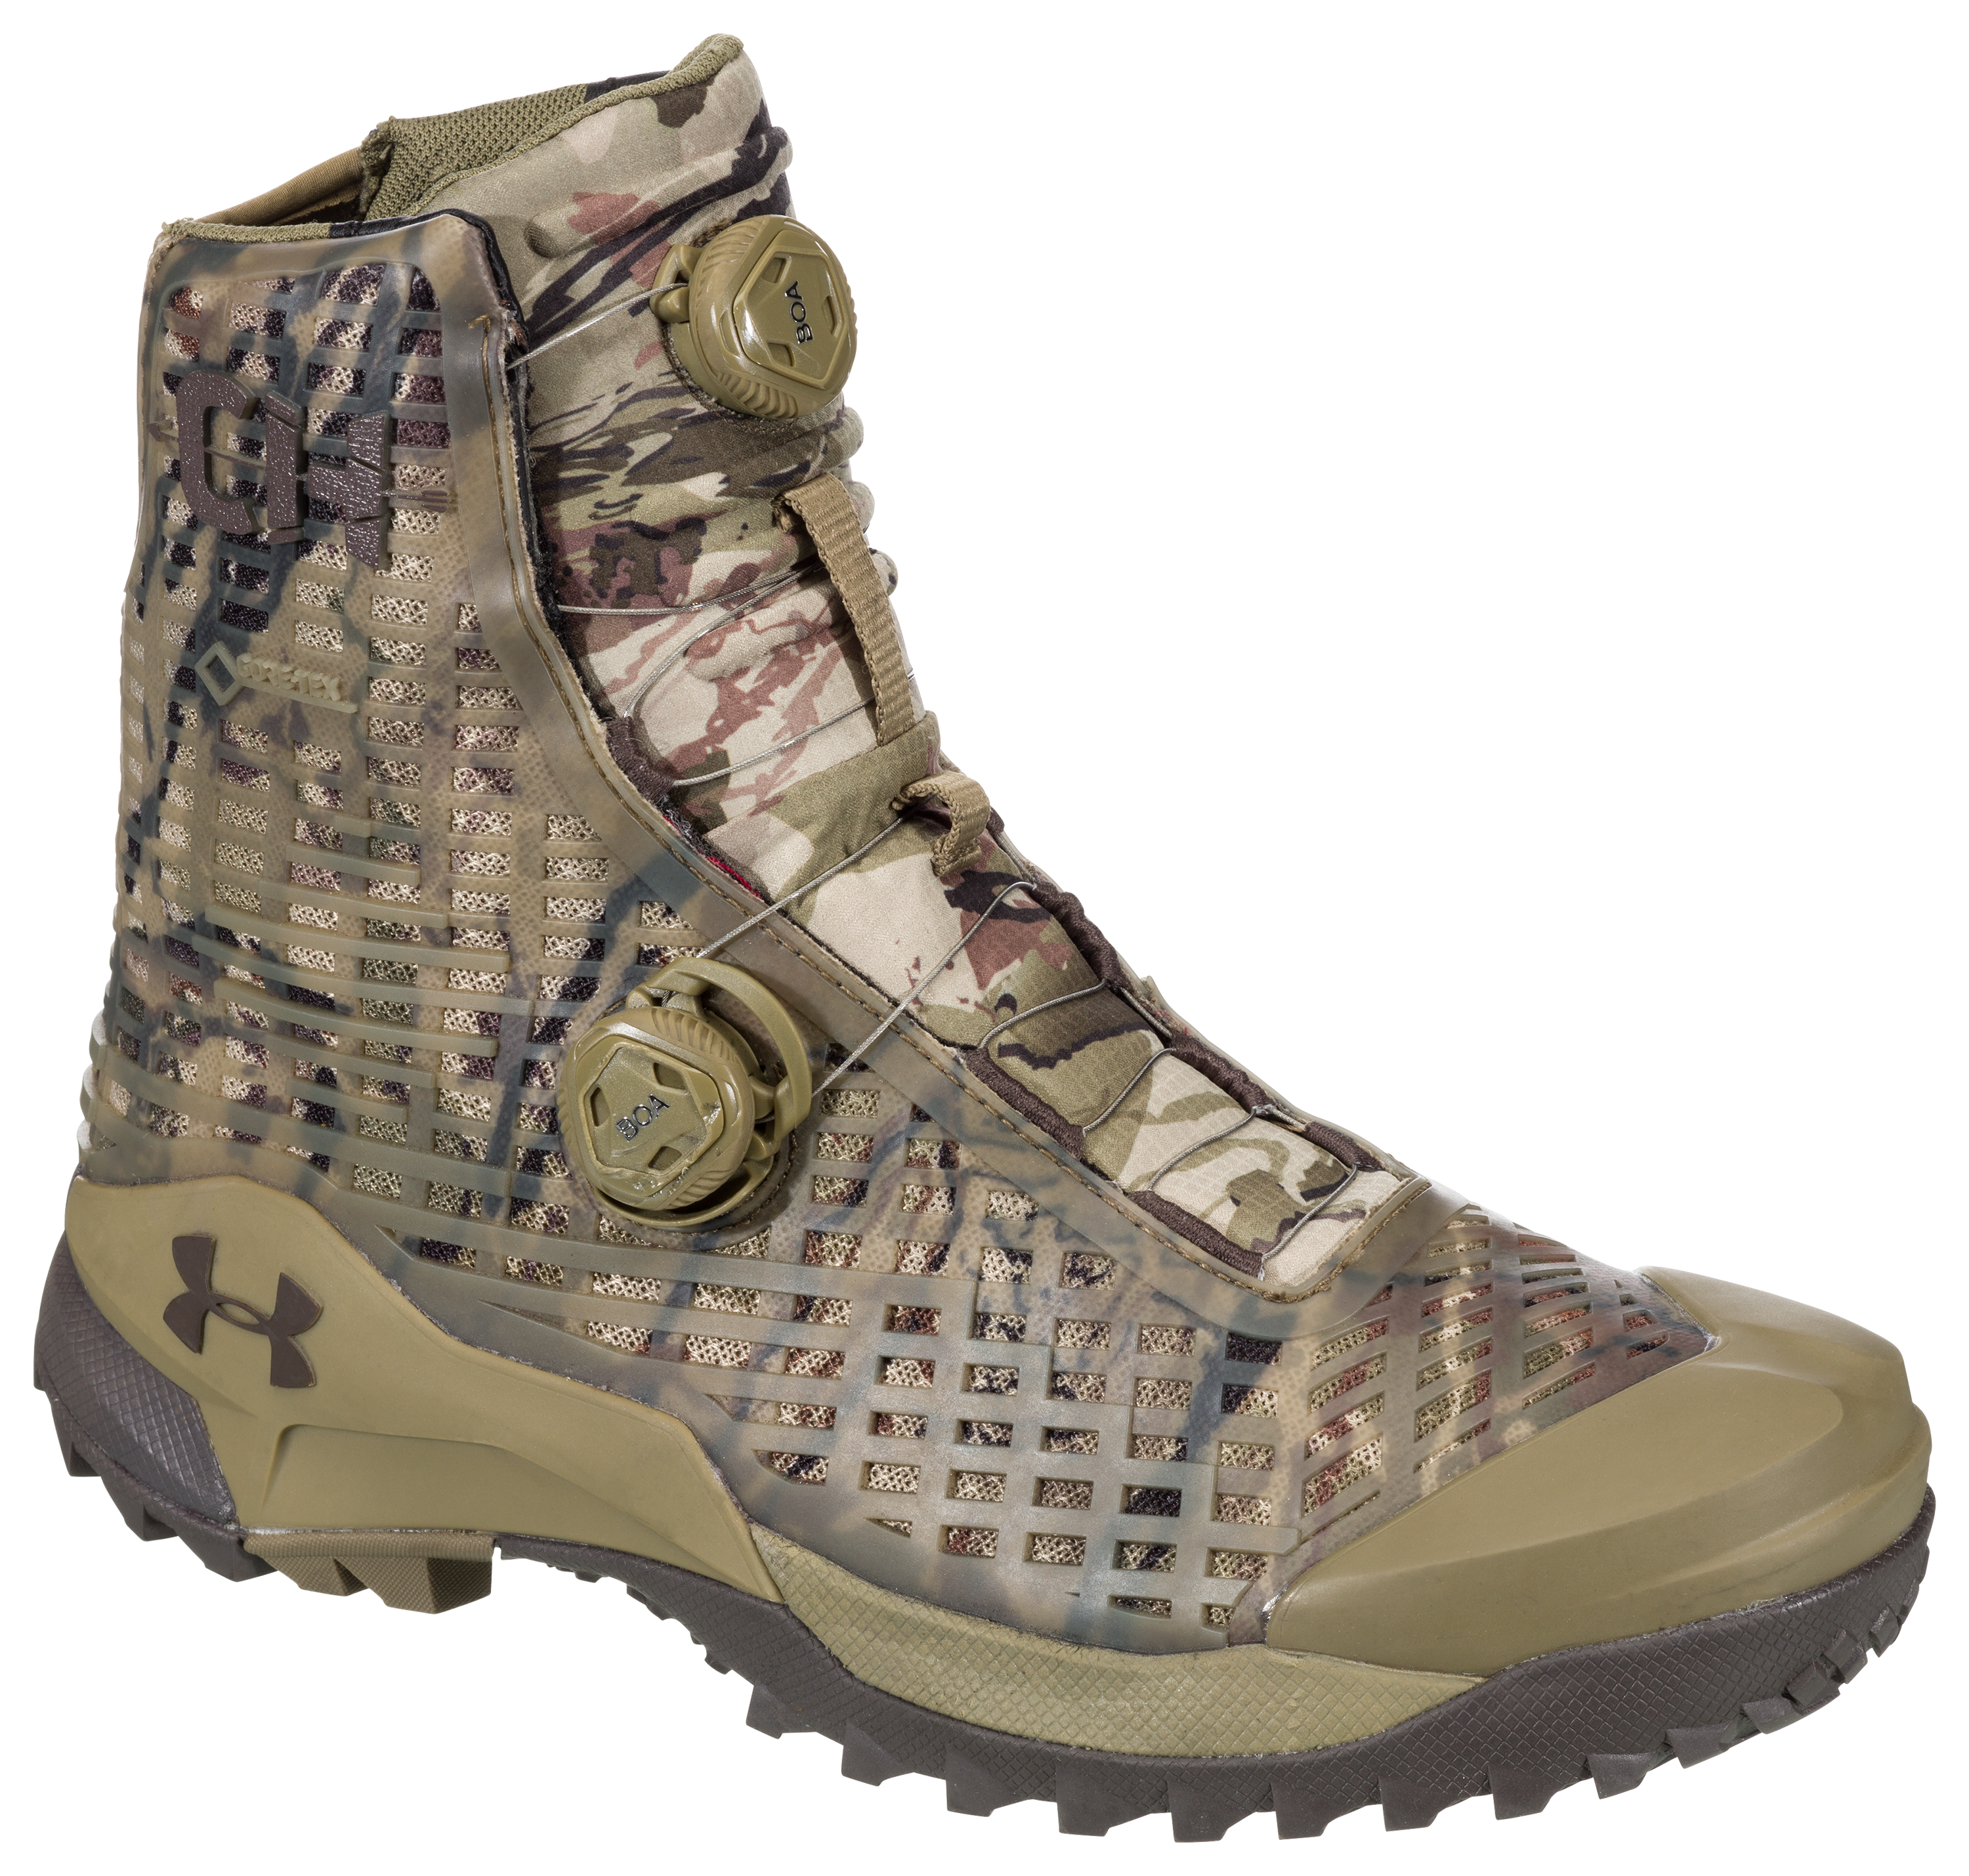 Under Armour CH1 GTX GORE-TEX Tactical Boots  for Men - Bayou Ridge Reaper Camo Barren - 10 5M